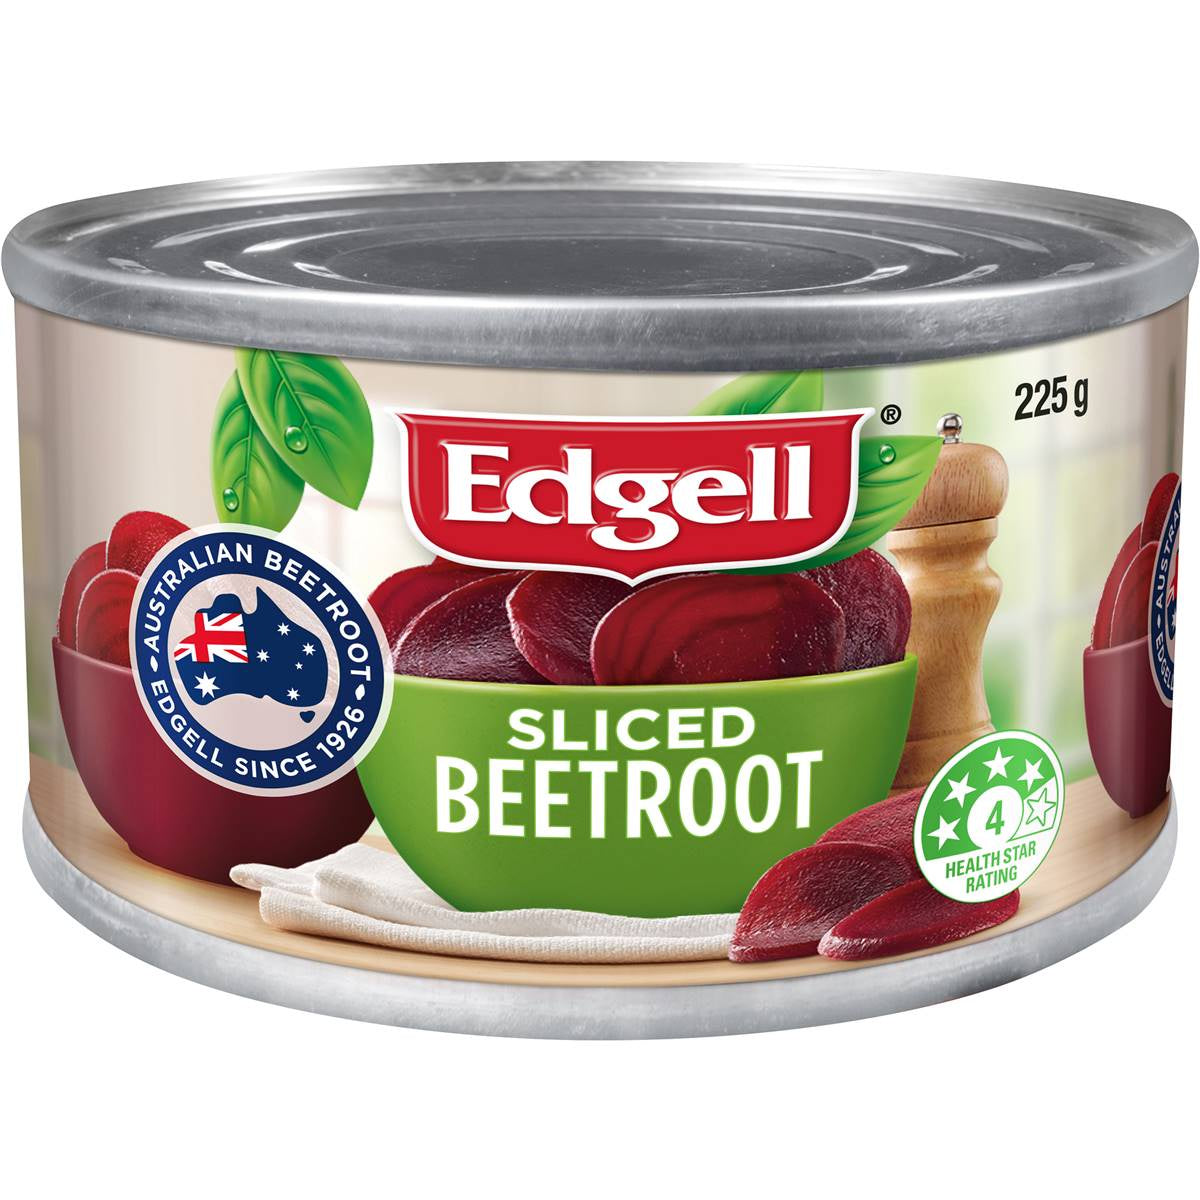 Edgell Sliced Beetroot 225g